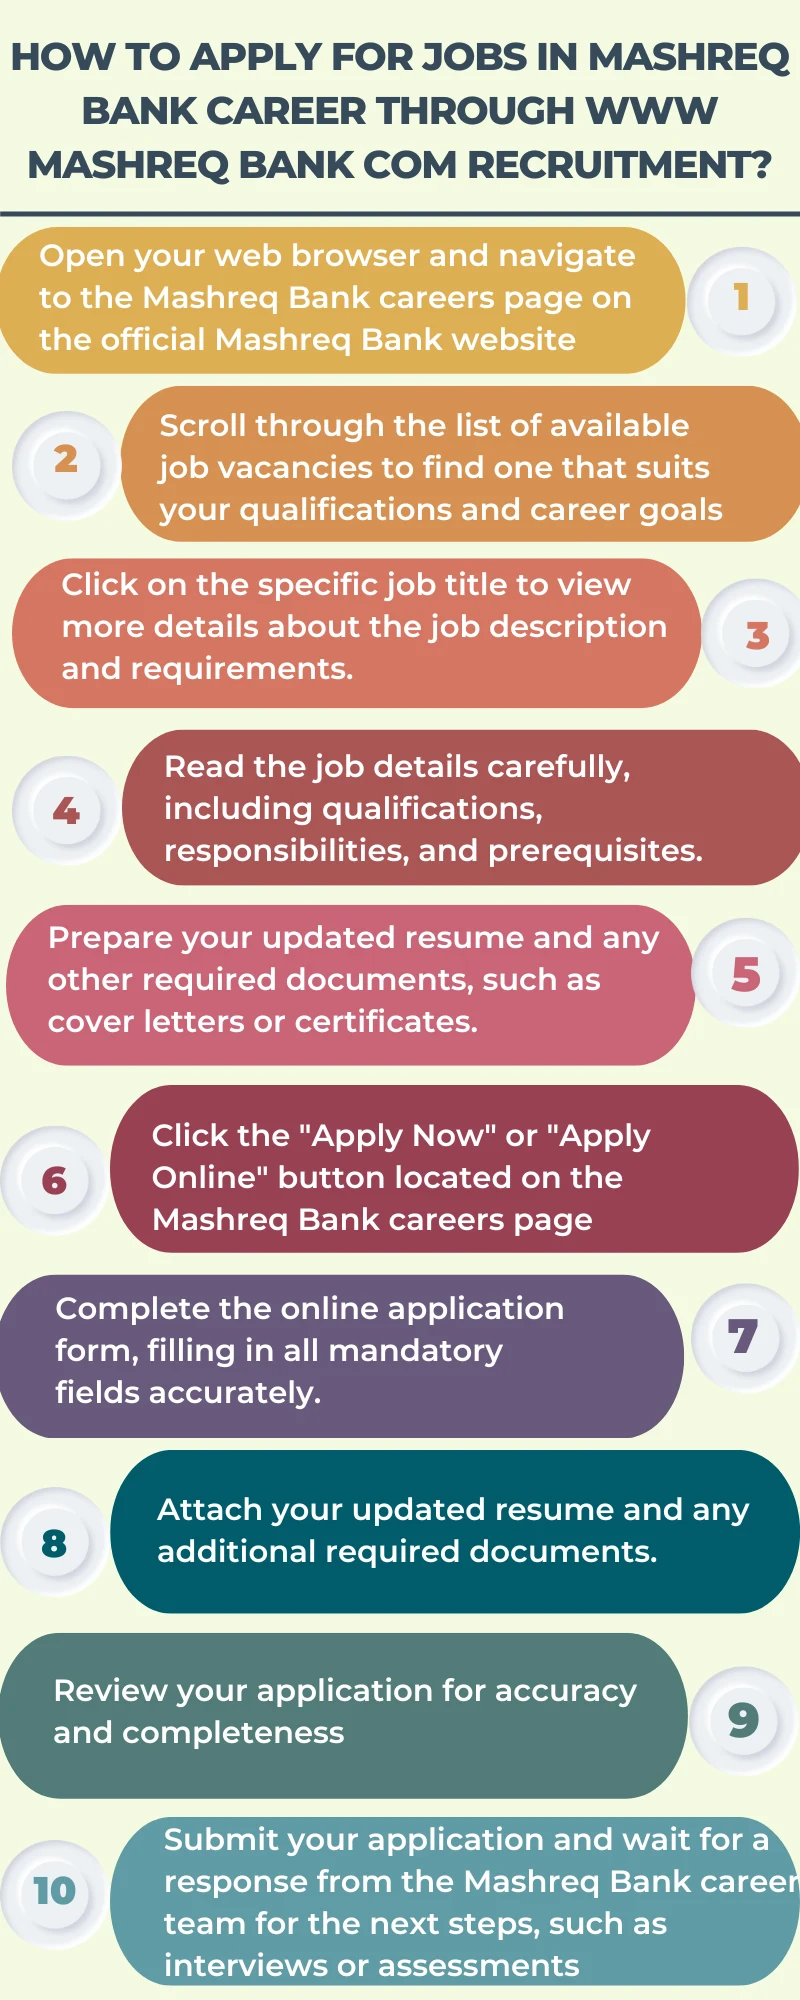 How to Apply for Jobs in Mashreq Bank Career through www Mashreq Bank com recruitment?